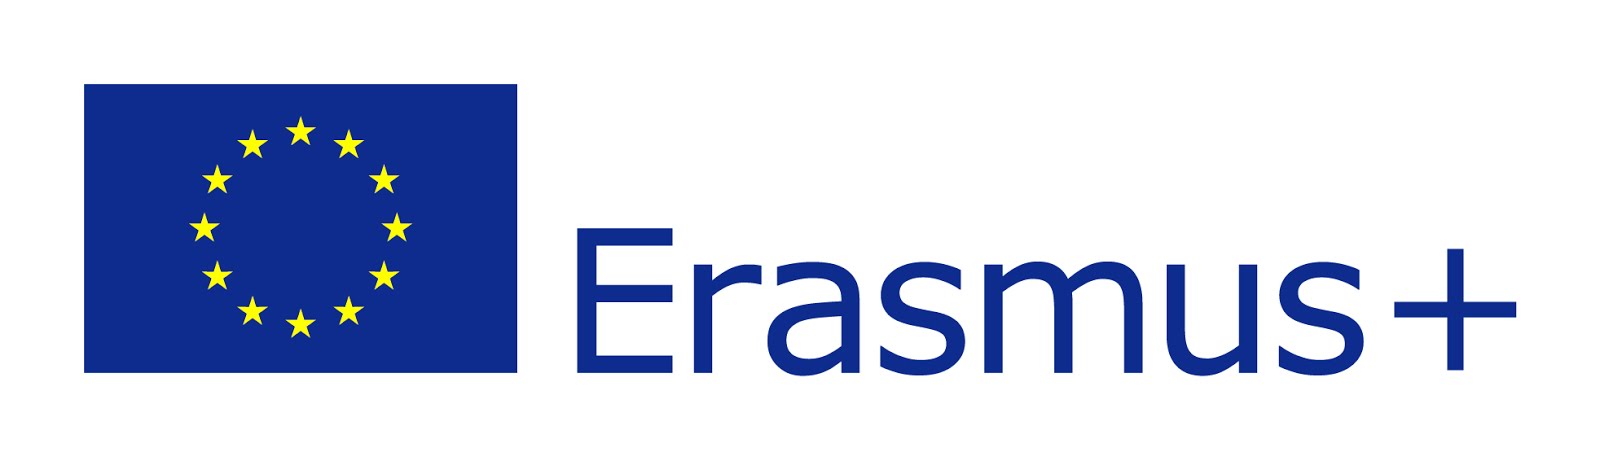 Read more about Erasmus+